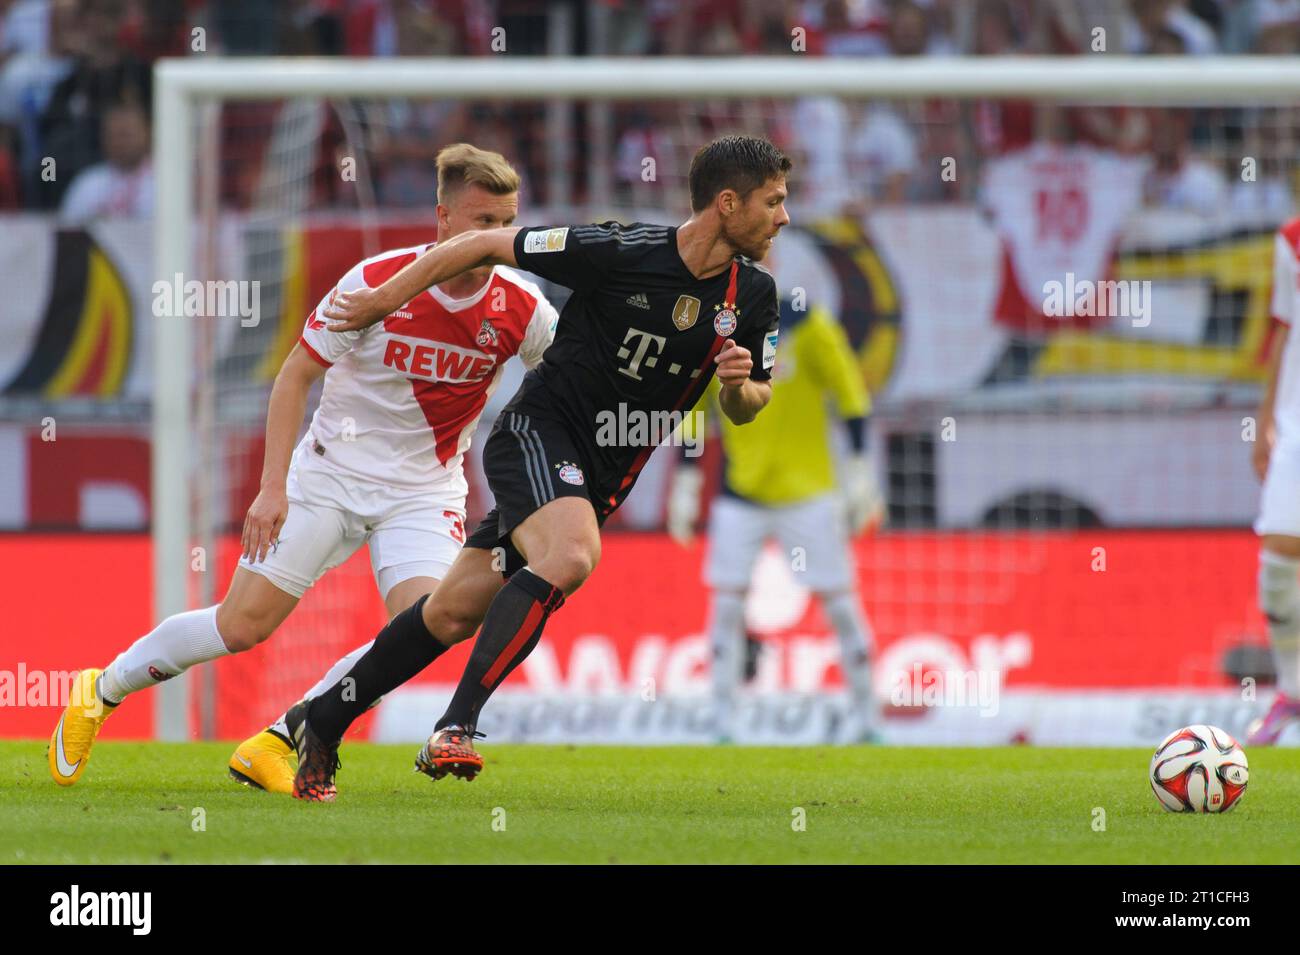 Xabi Alonso (3 - FC Bayern München) 1.FC Koeln - FC Bayern Muenchen 0:2 Fussball Bundesliga Saison 2014/2015 in Koeln, Deutschland am 27.09.2014 Stock Photo